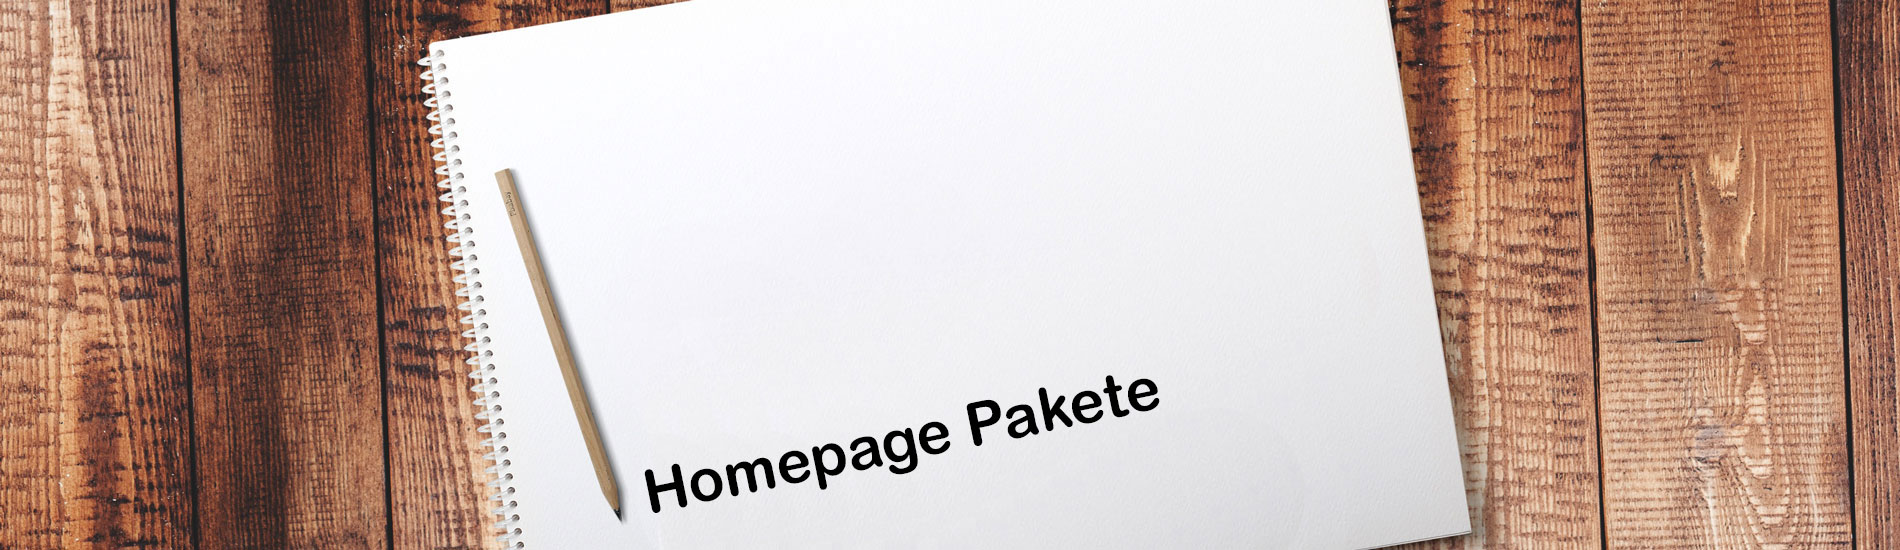 homepage-pakete